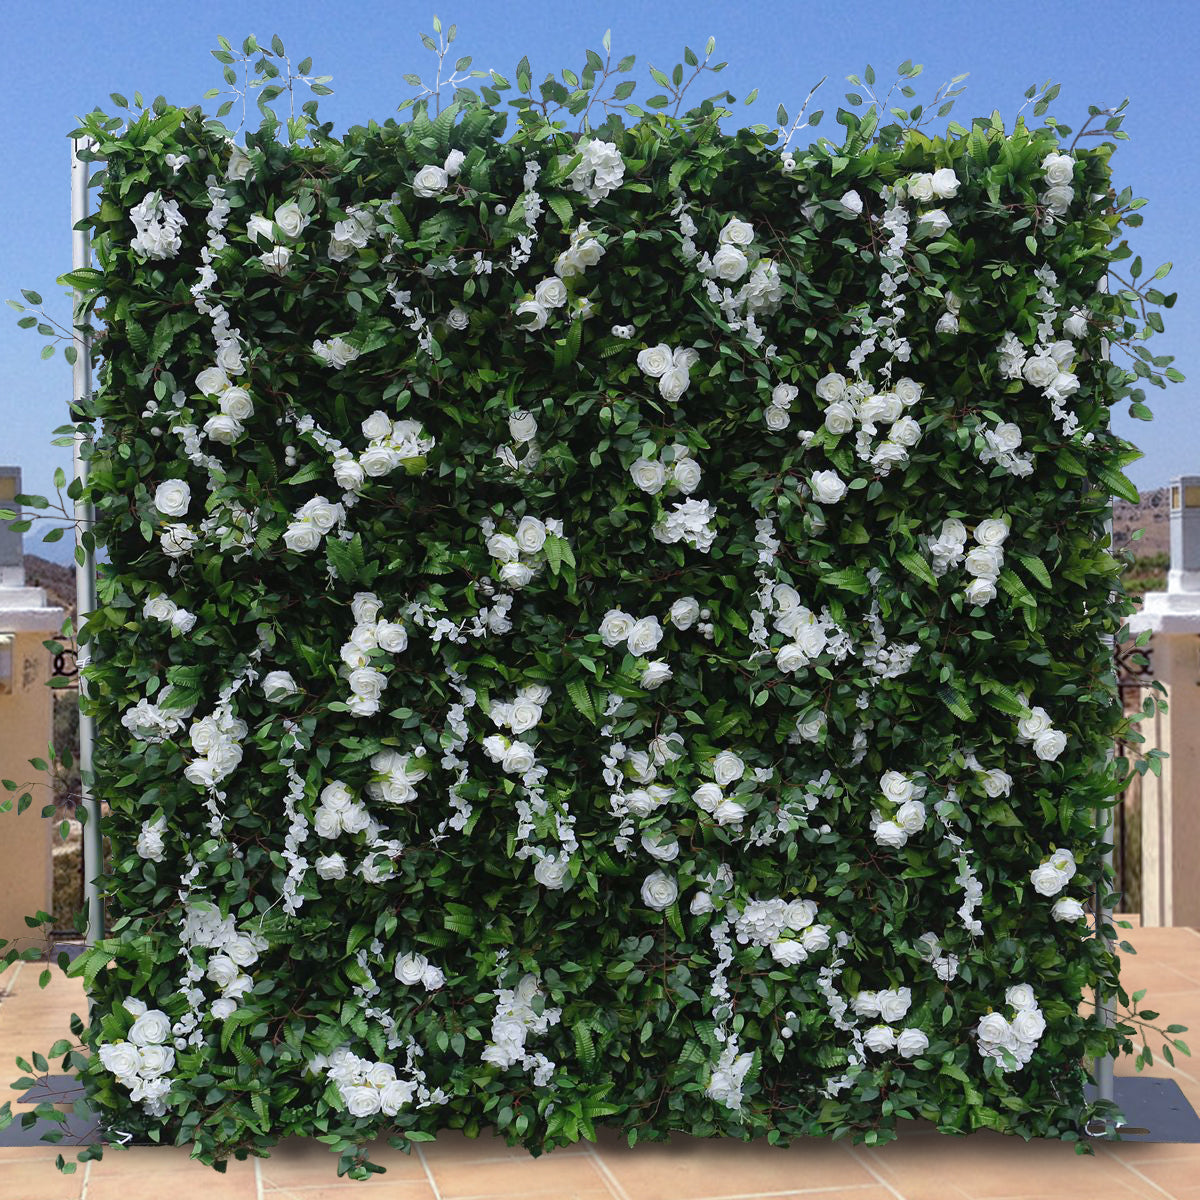 5D Artificial Flower Wall Arrangement Wedding Party Birthday Backdrop Decor HQ9027